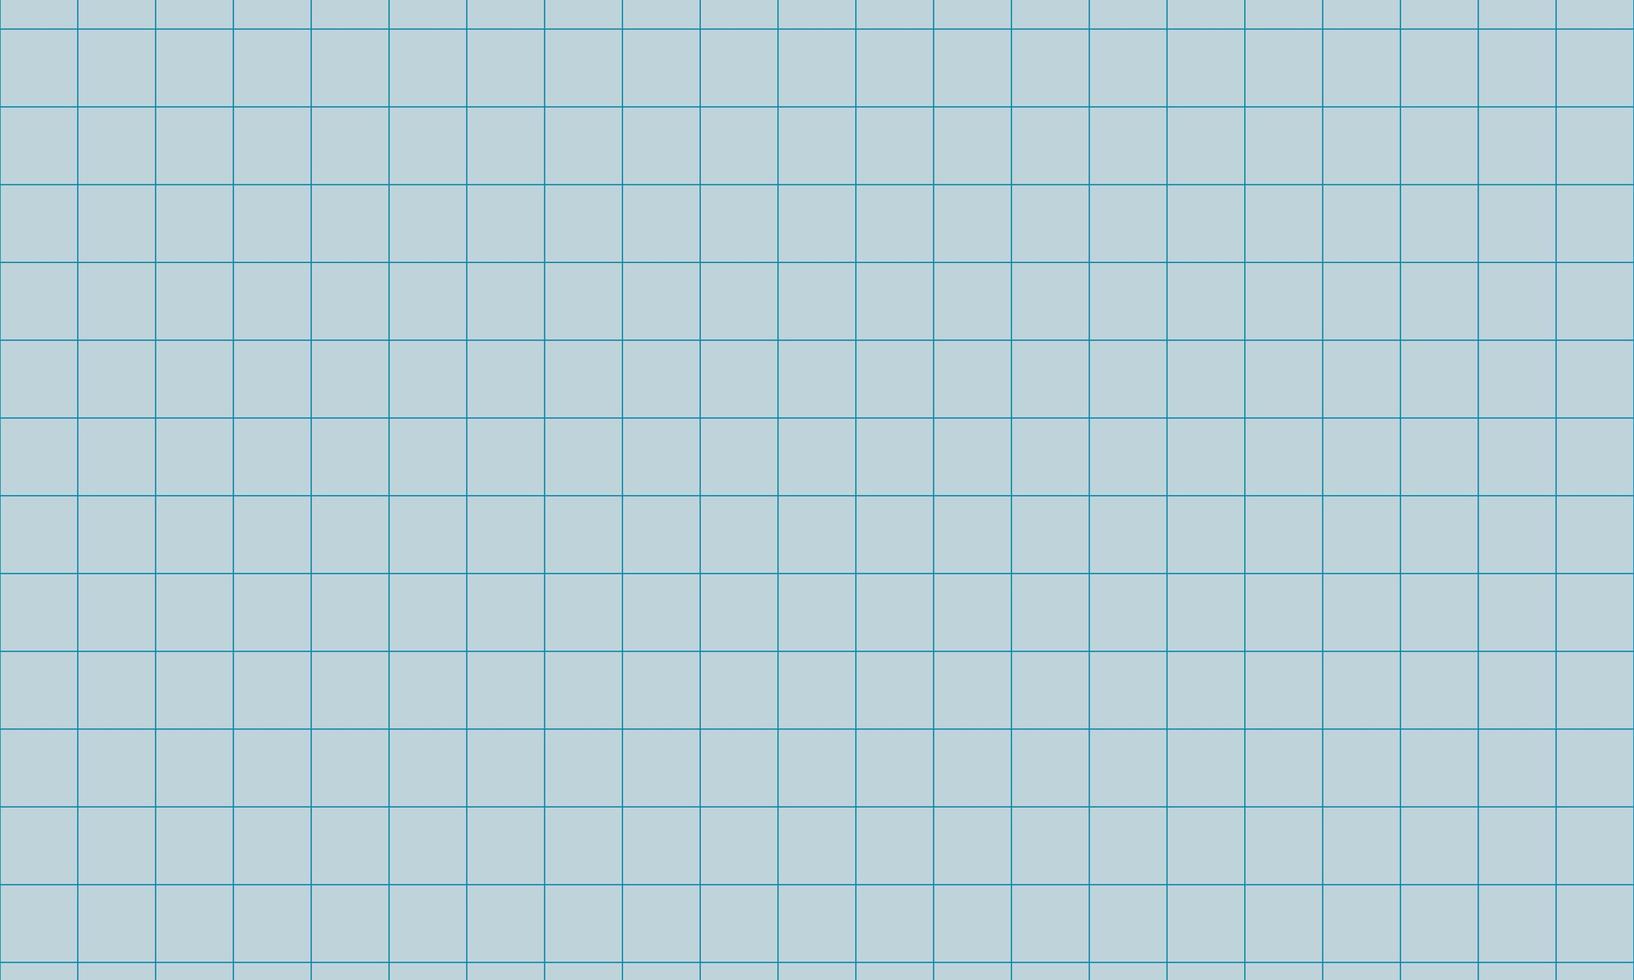 A blue grid on a light blue background - Blue, light blue, pastel blue